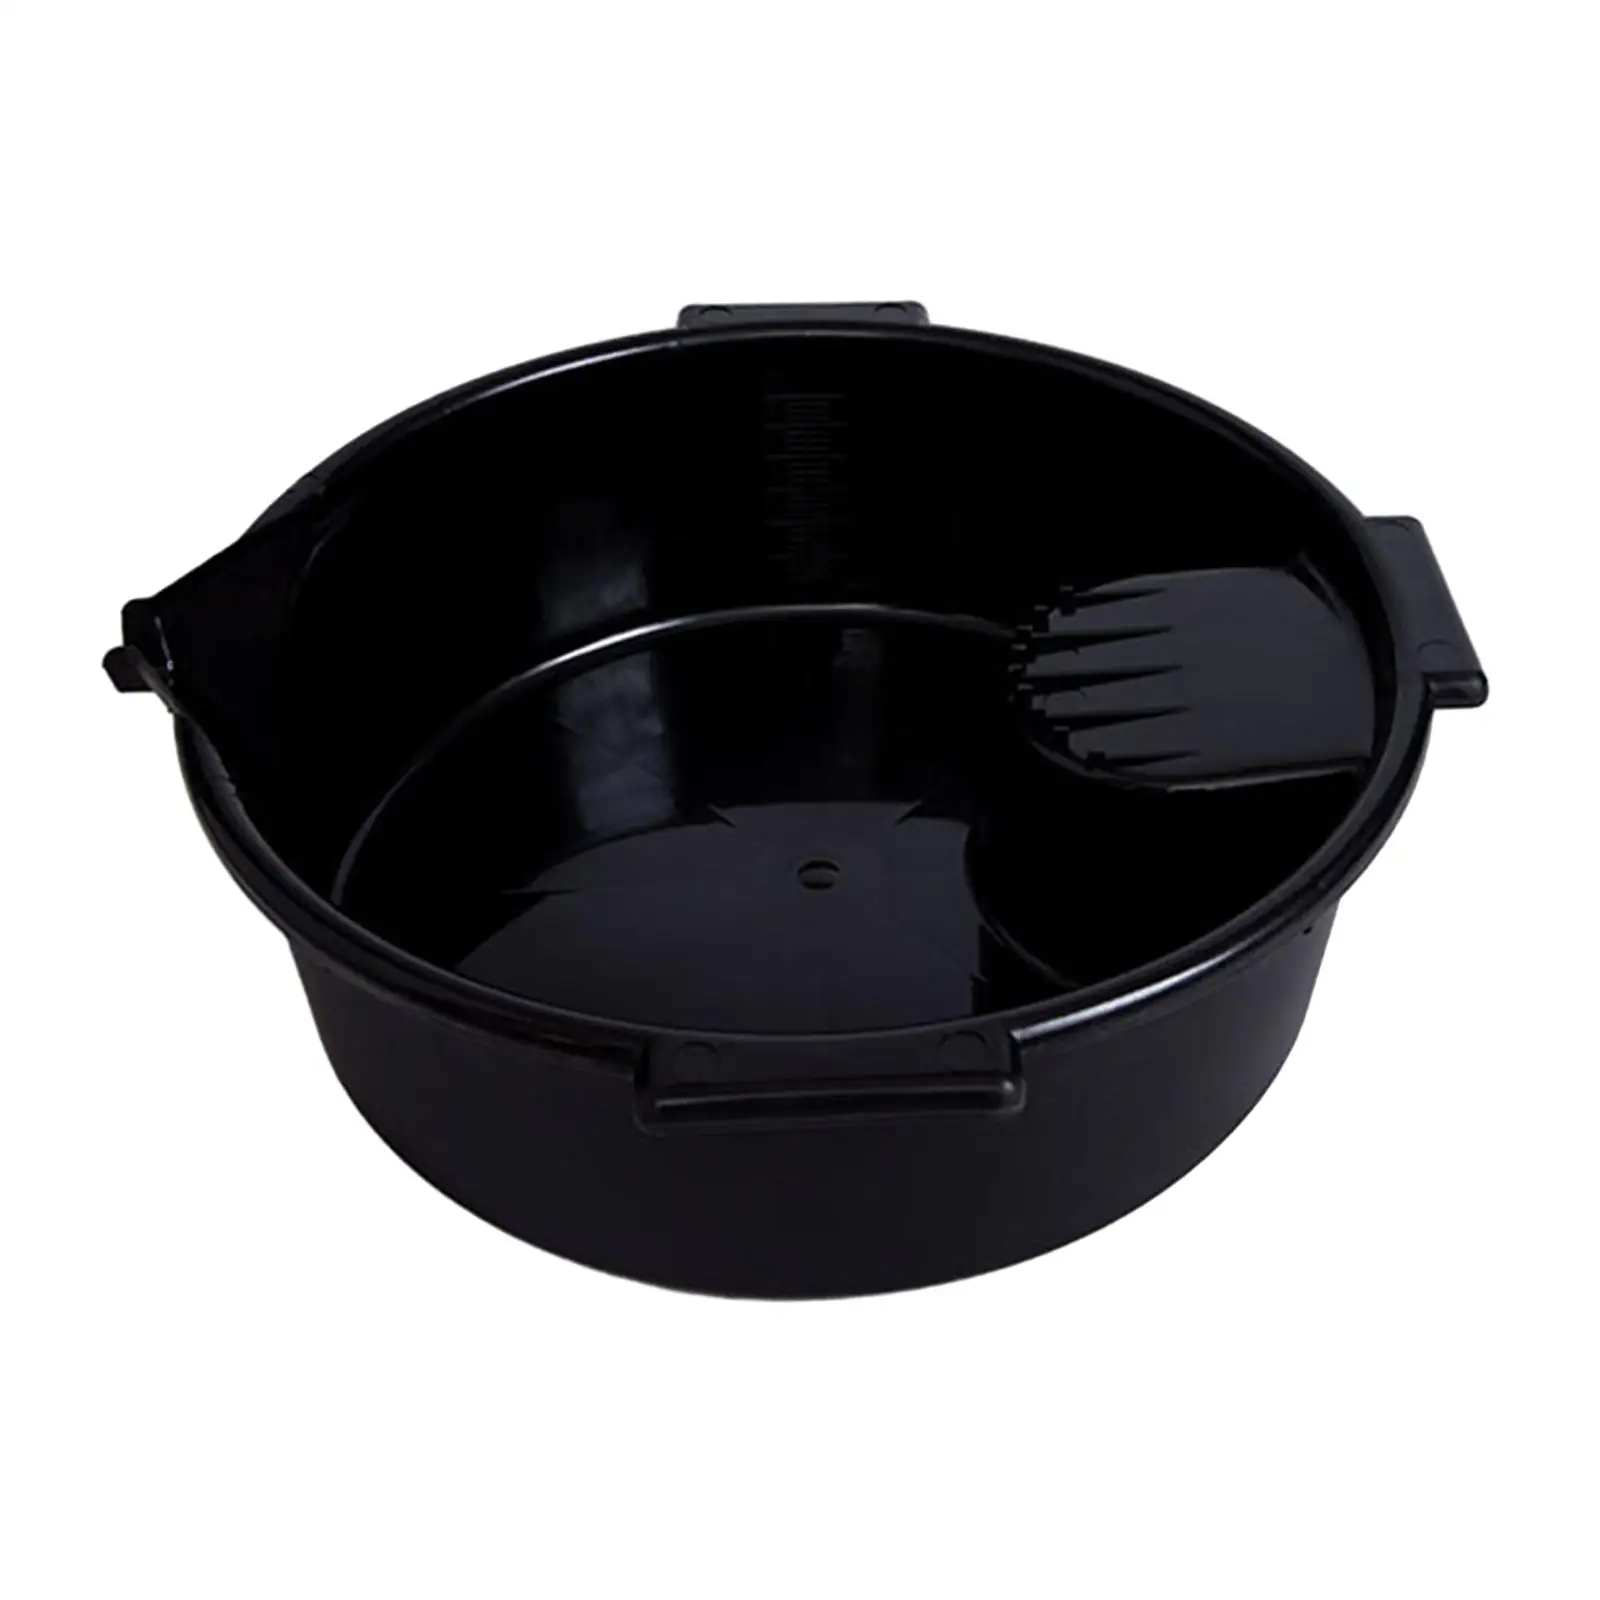 Drain Pan Oil Change Pan, 8L Capacity, Prevents Spills Lightweight Leak Proof